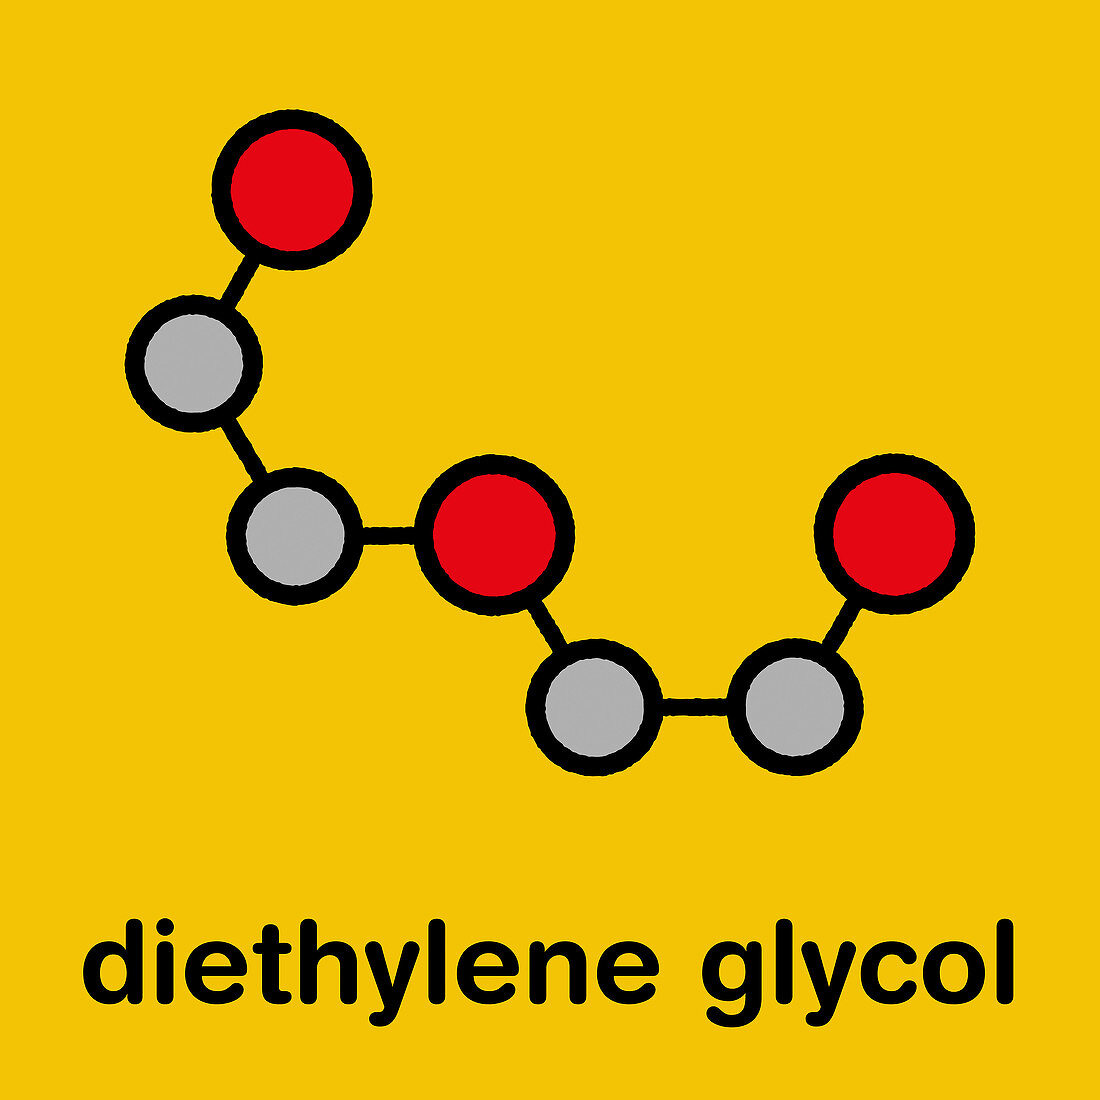 Diethylene glycol chemical solvent molecule